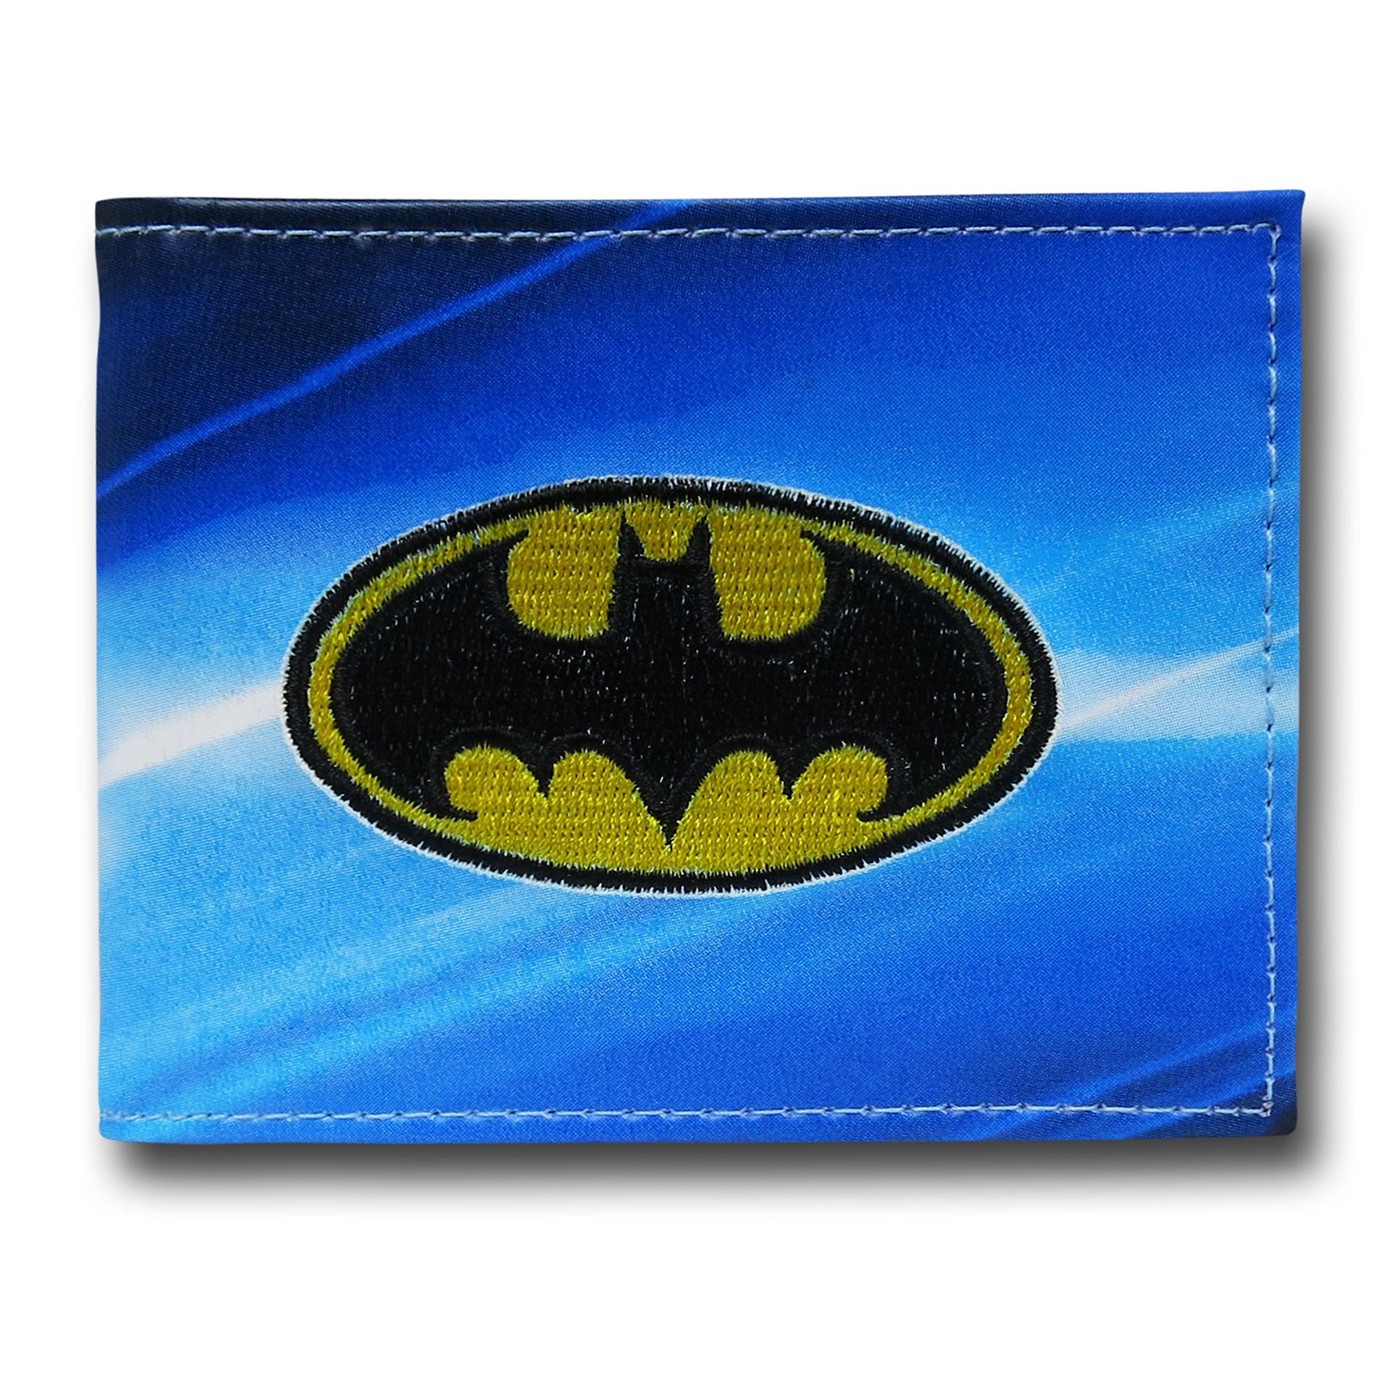 Batman 3D Emblem Sublimated Wallet